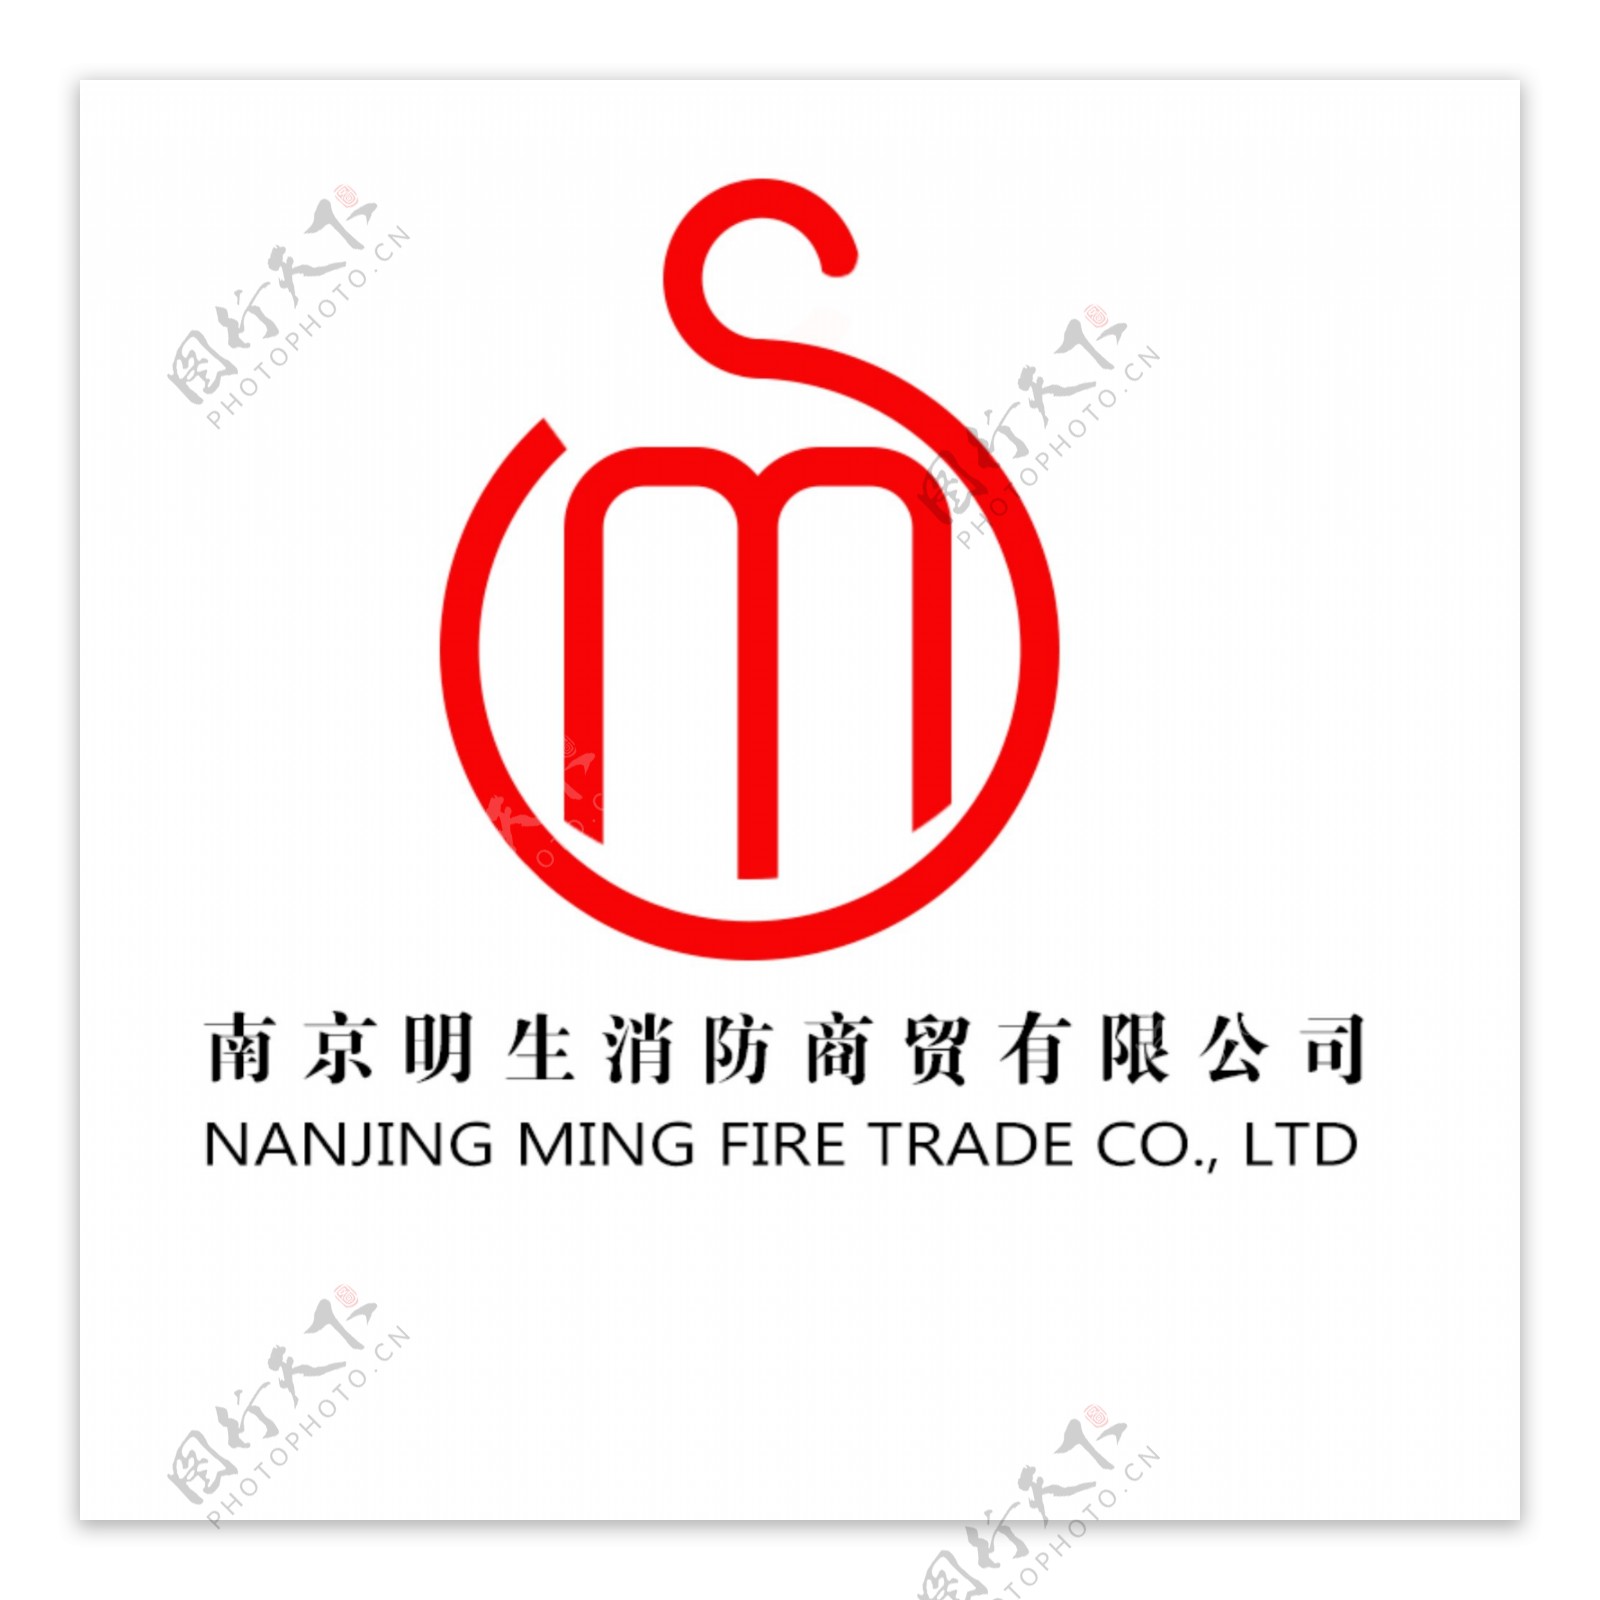 mslogo消防公司logo